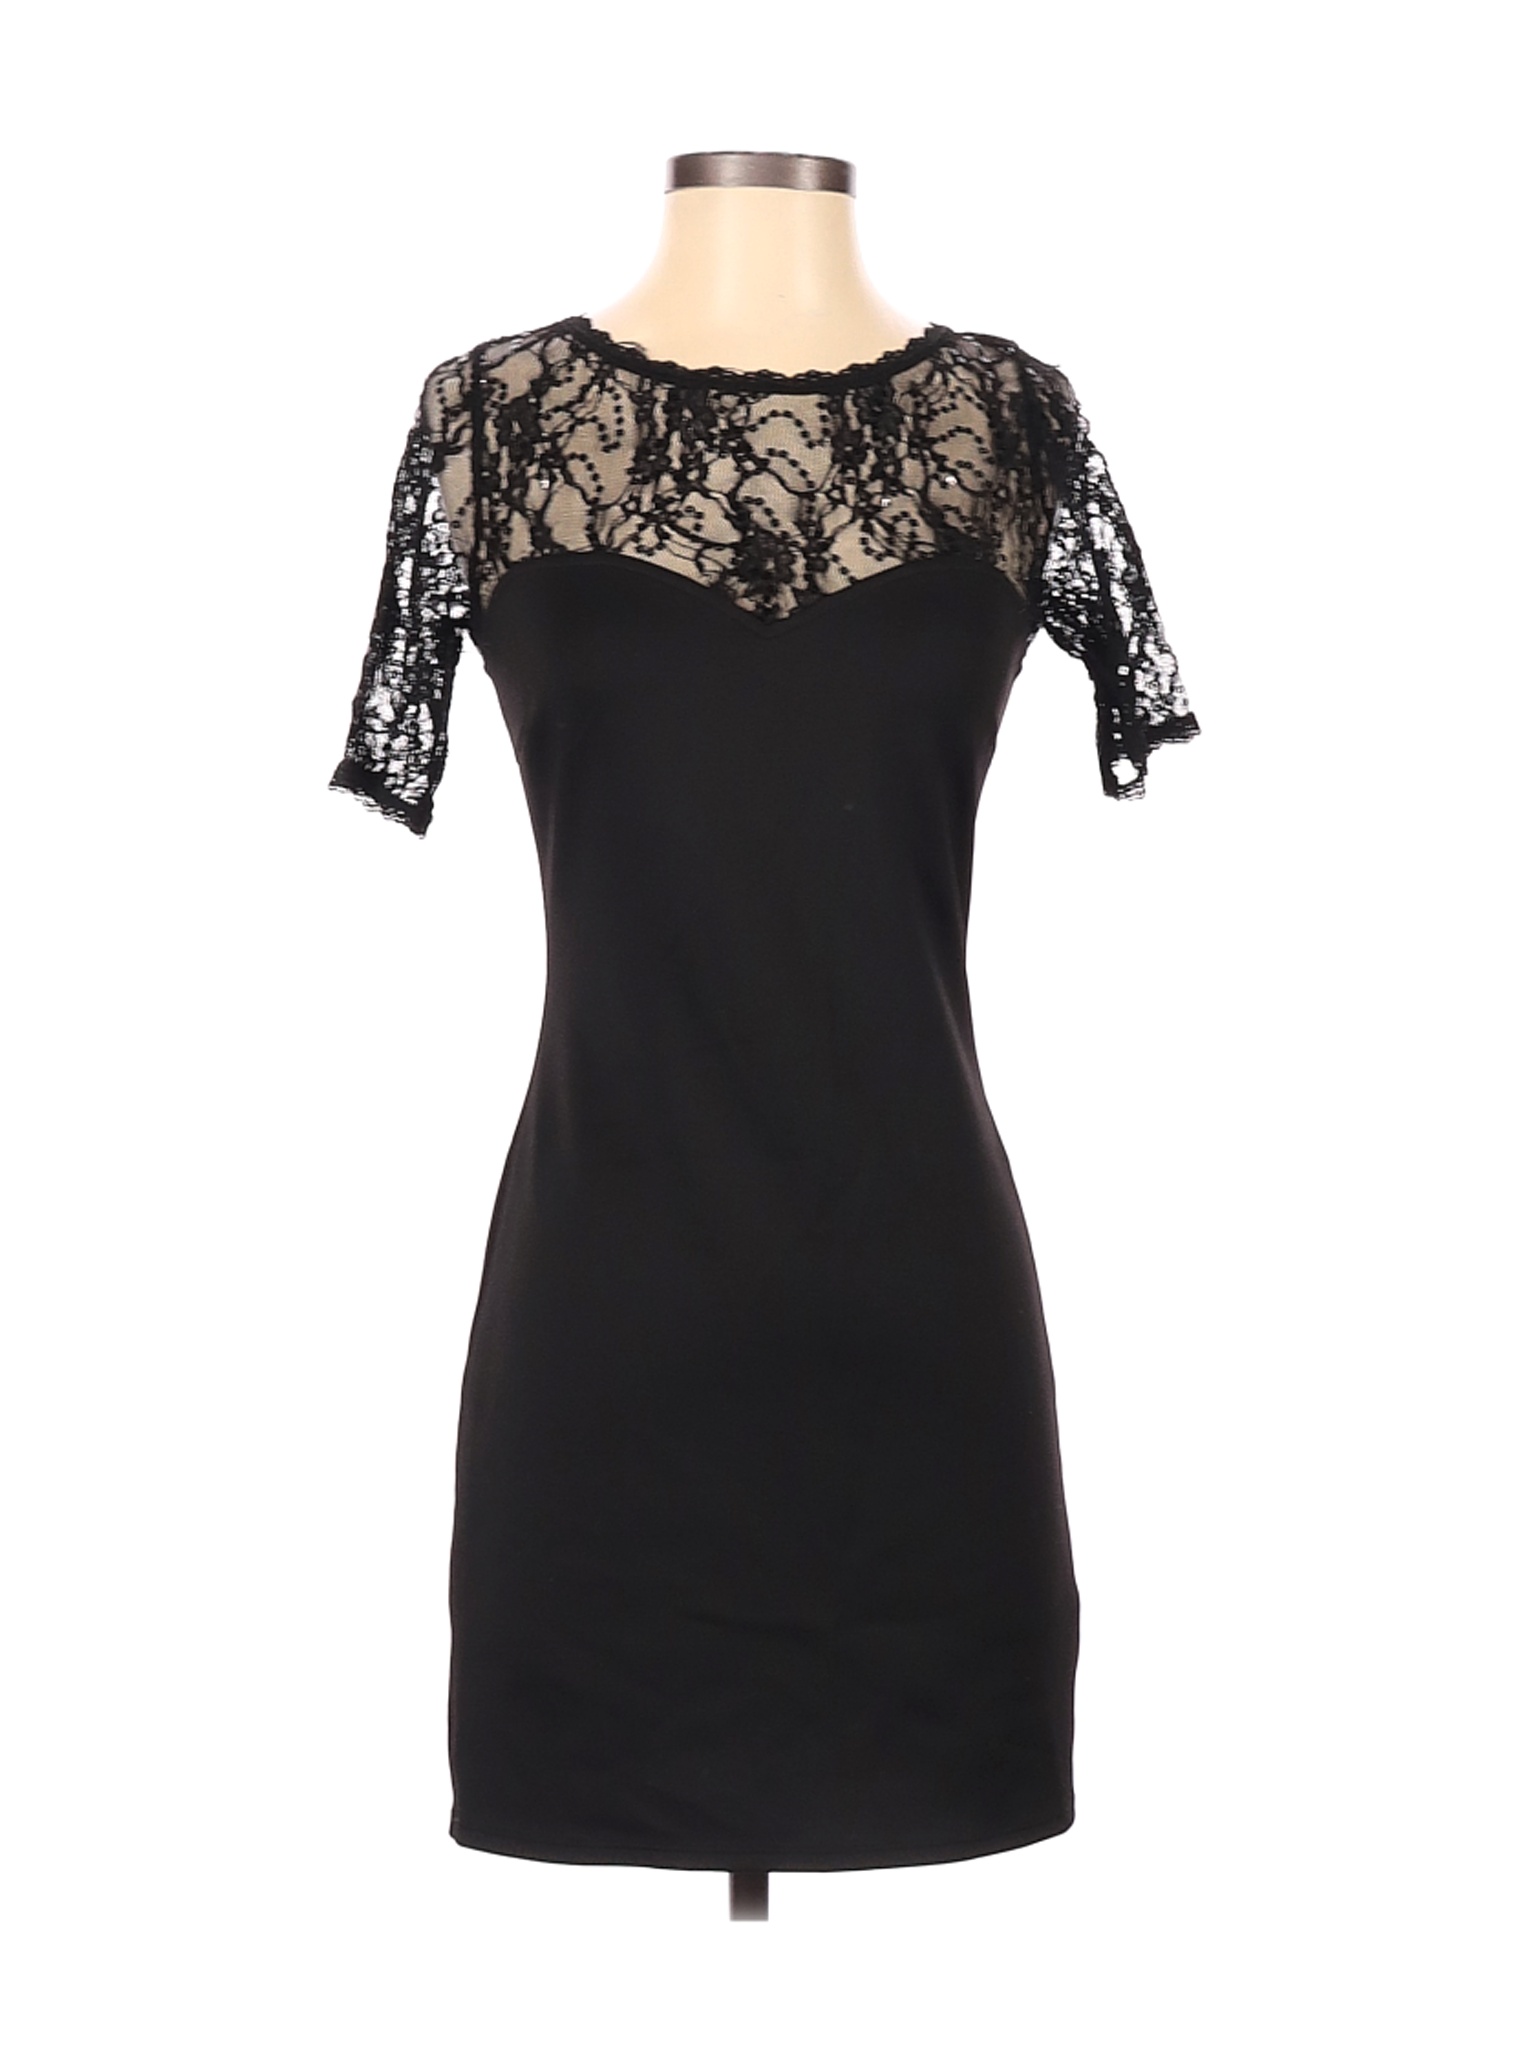 Alya Women Black Cocktail Dress S | eBay